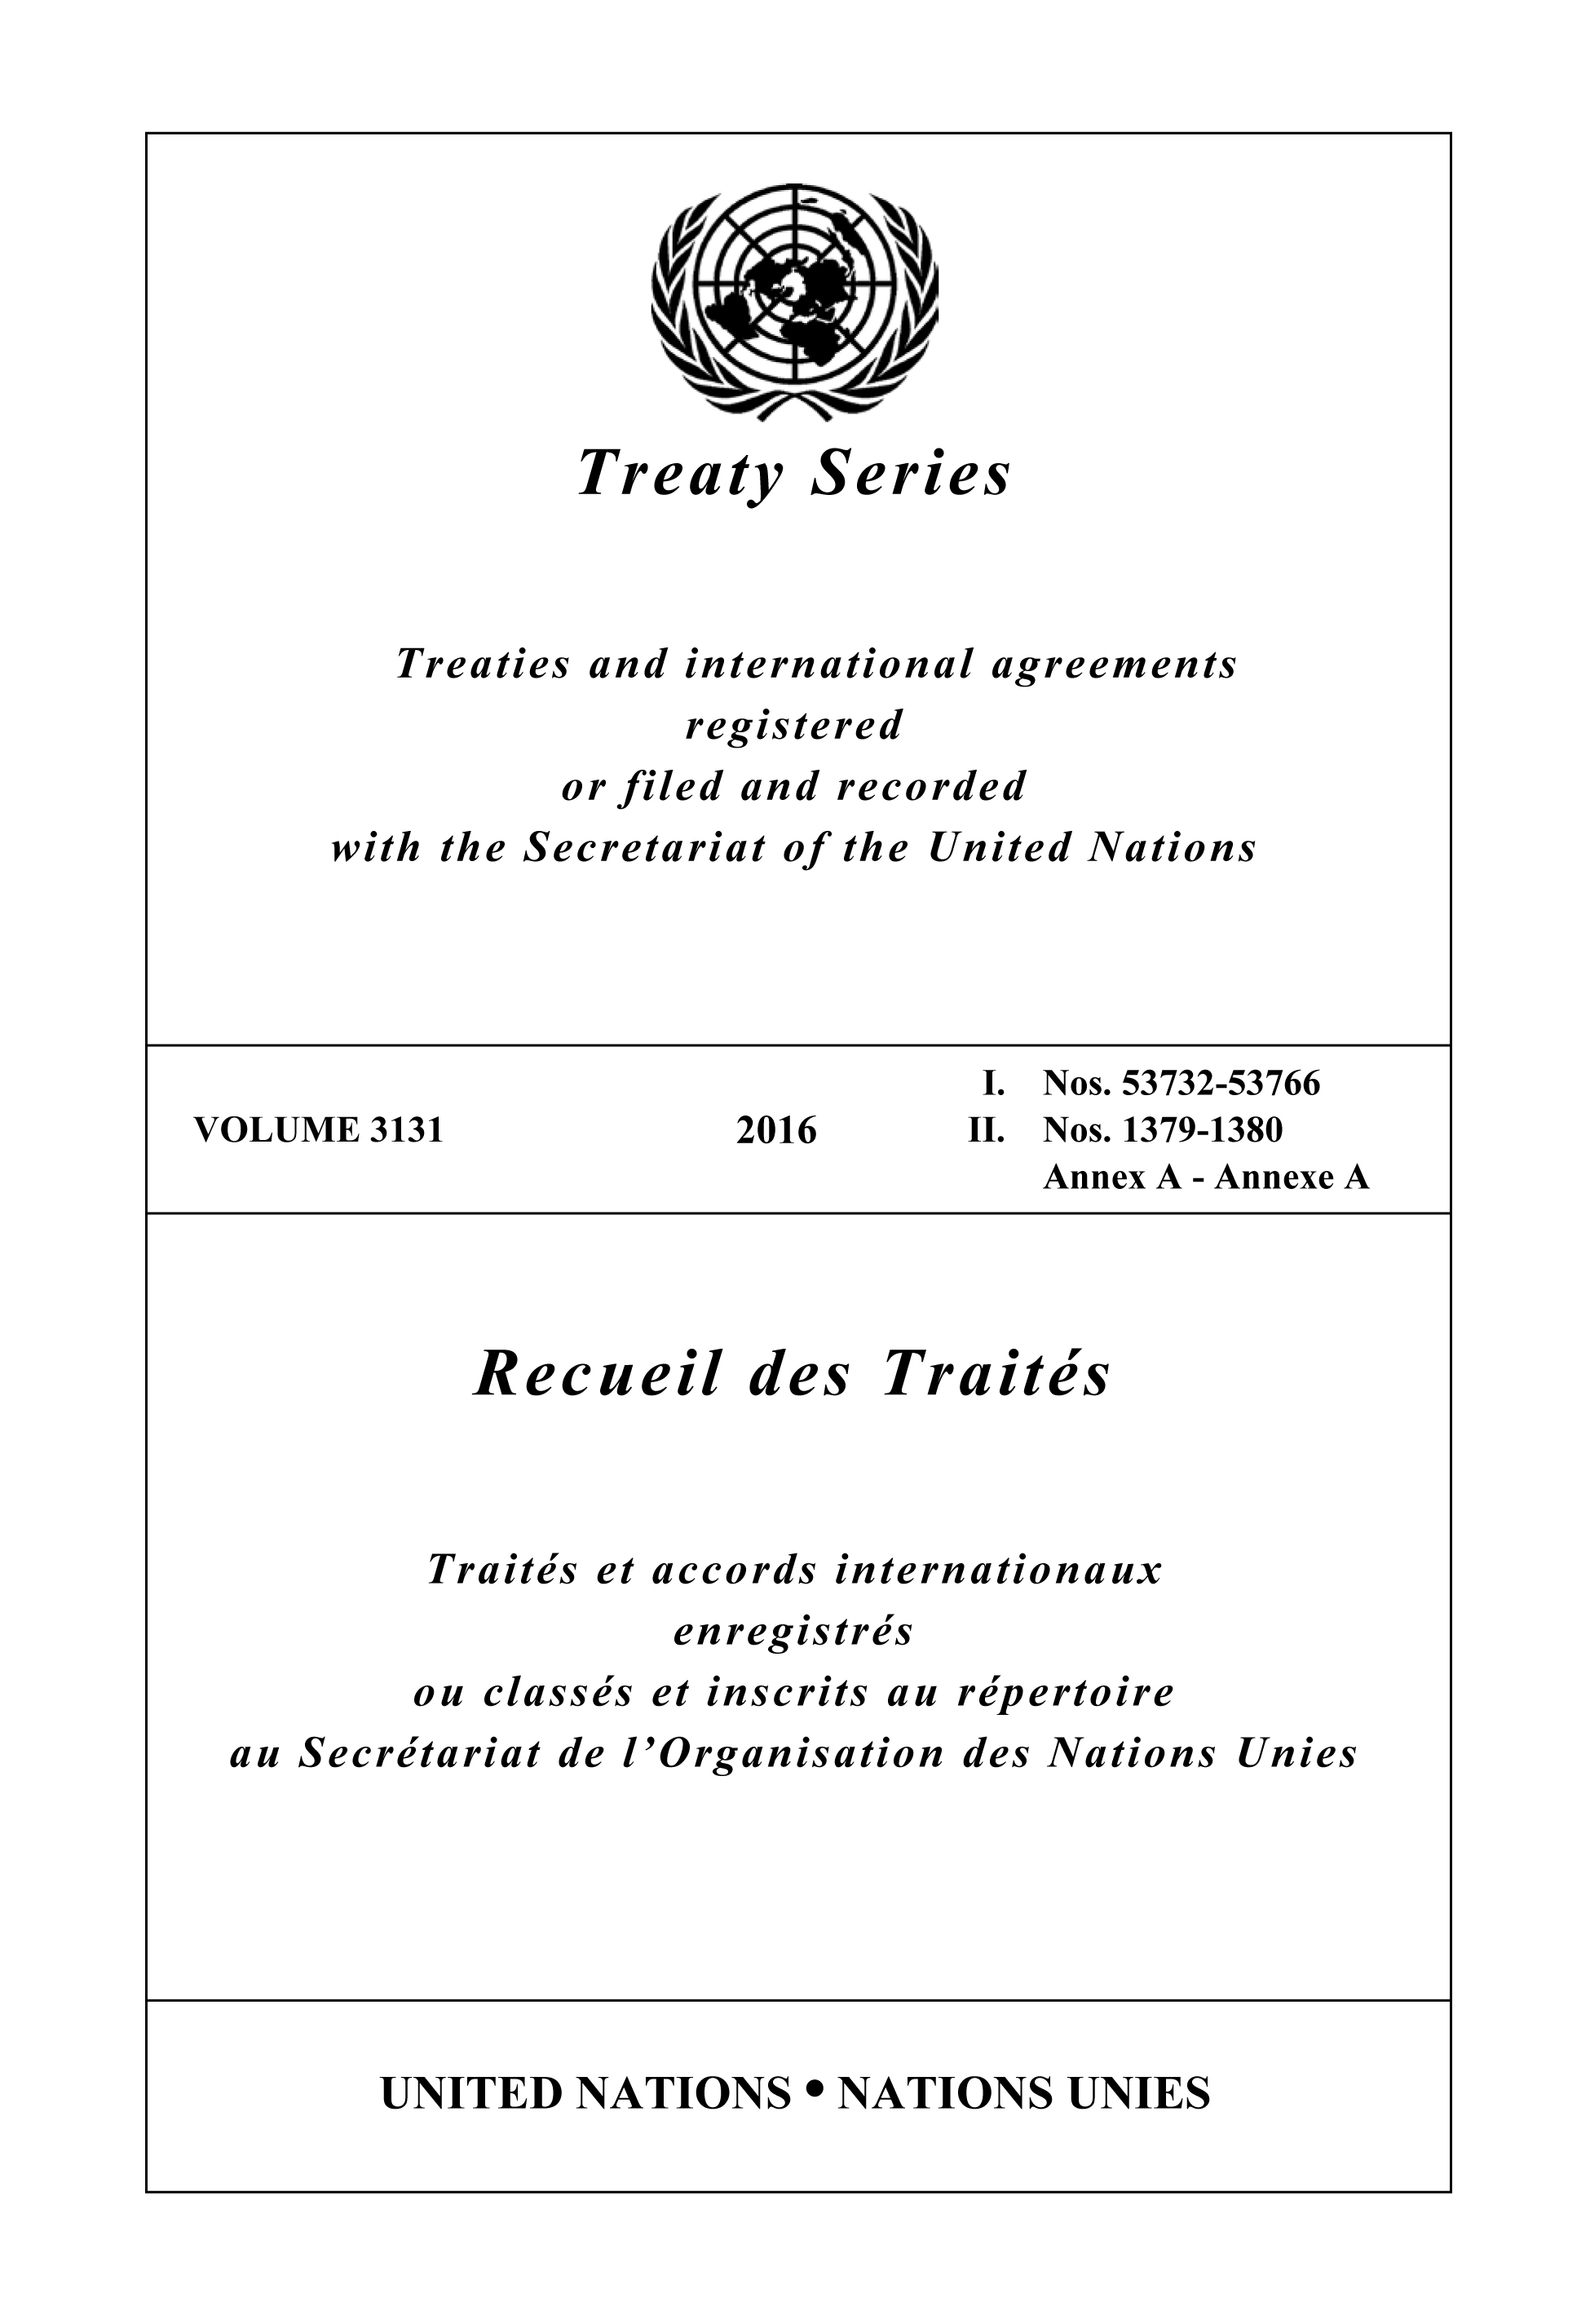 image of Treaty Series 3131